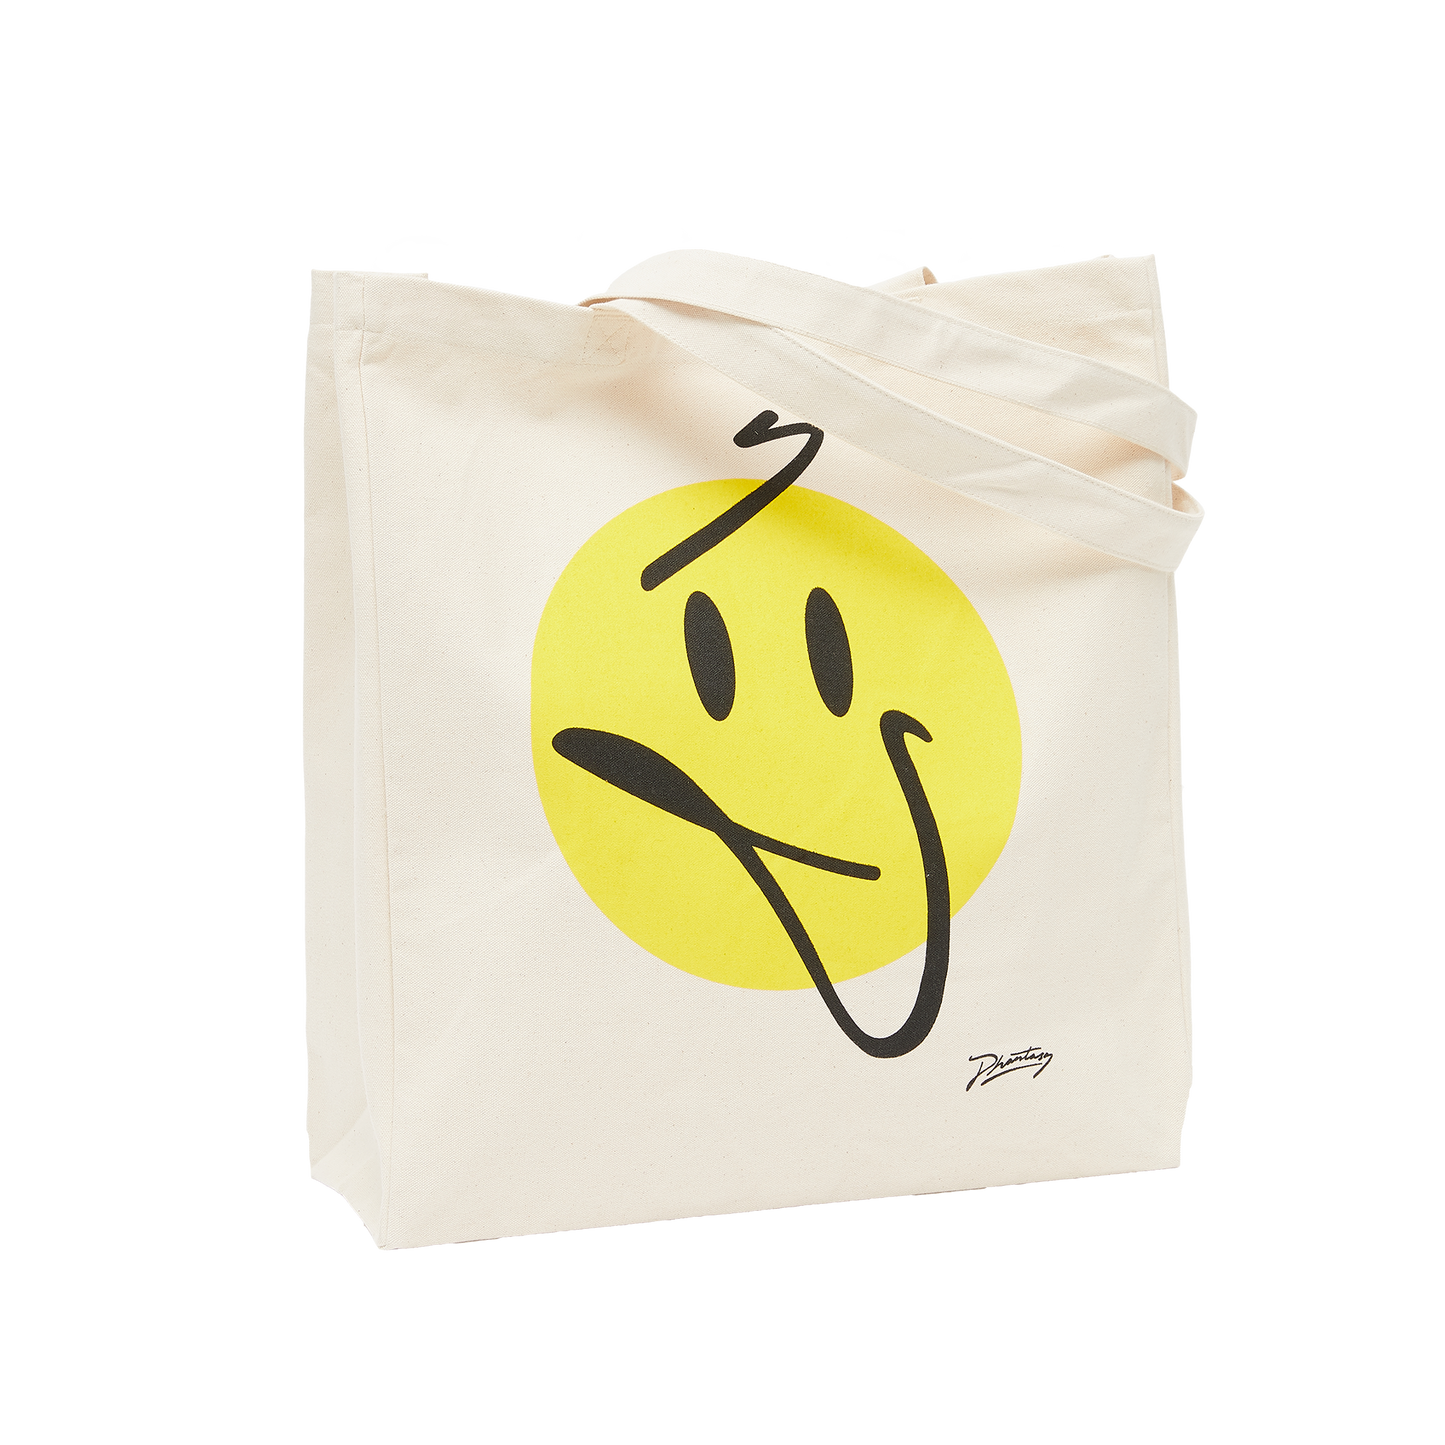 Phantasy 'Smile' Record Bag